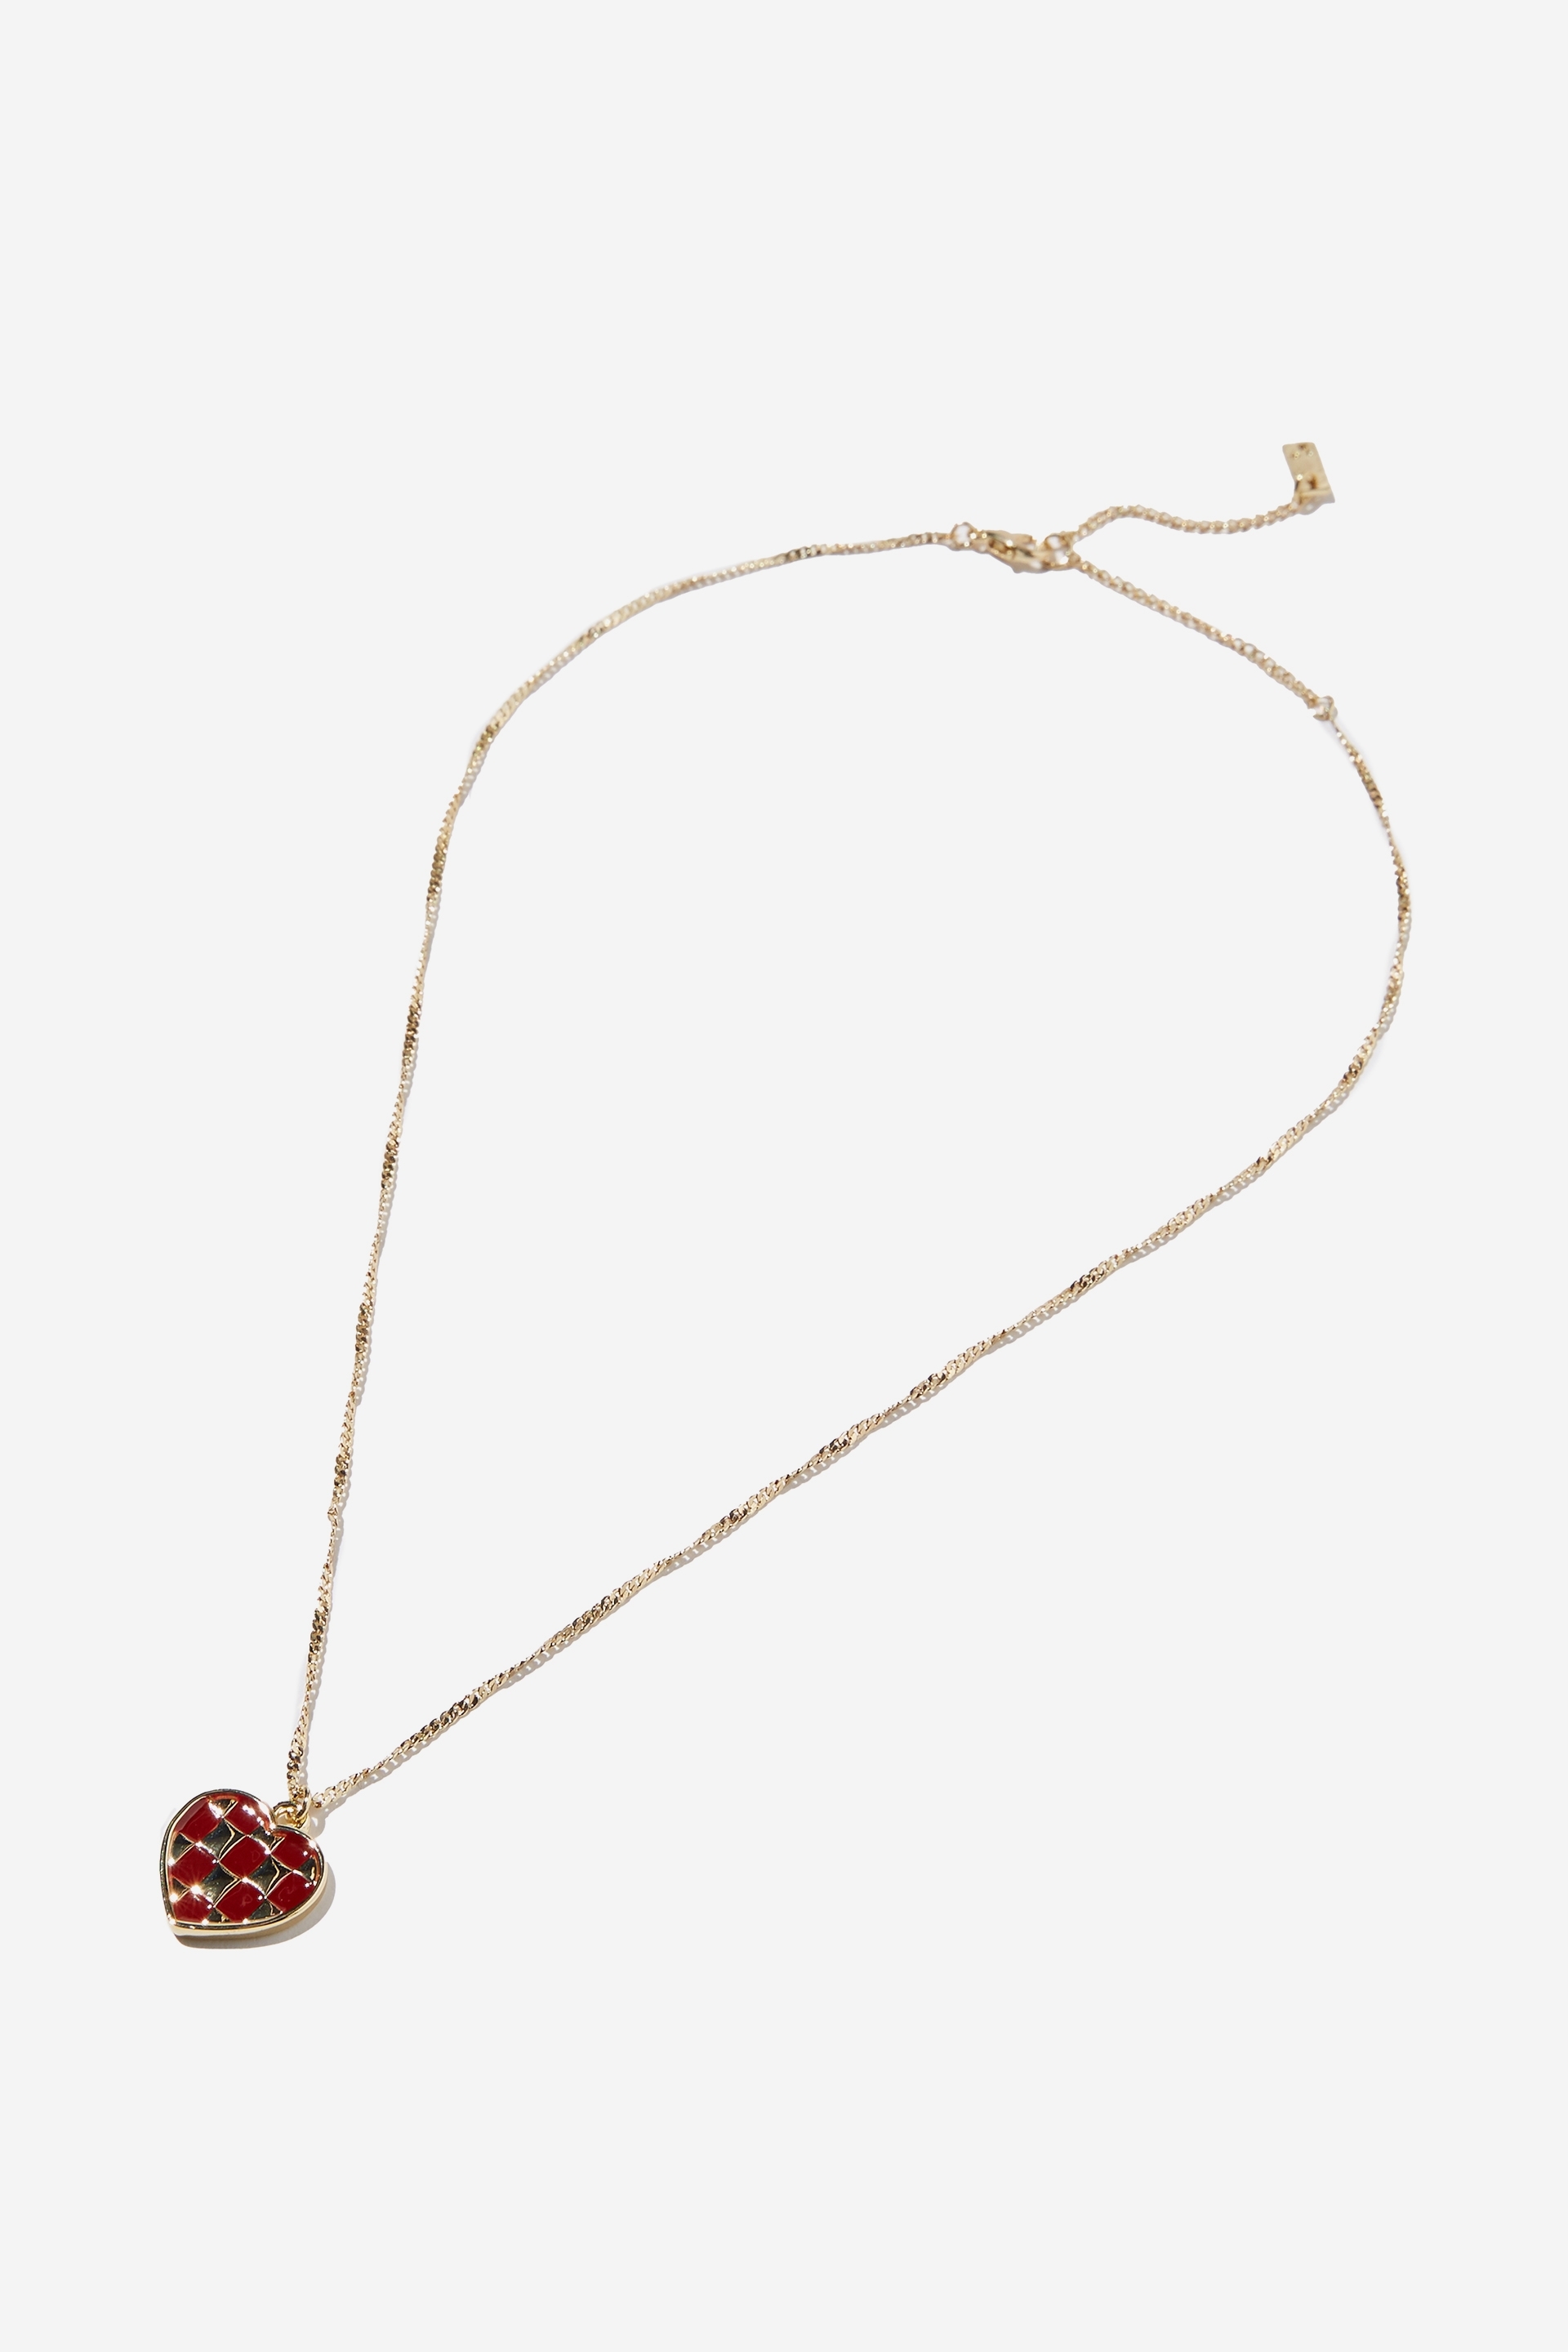 Rubi - Premium Pendant Necklace - Gold plated heart checkerboard